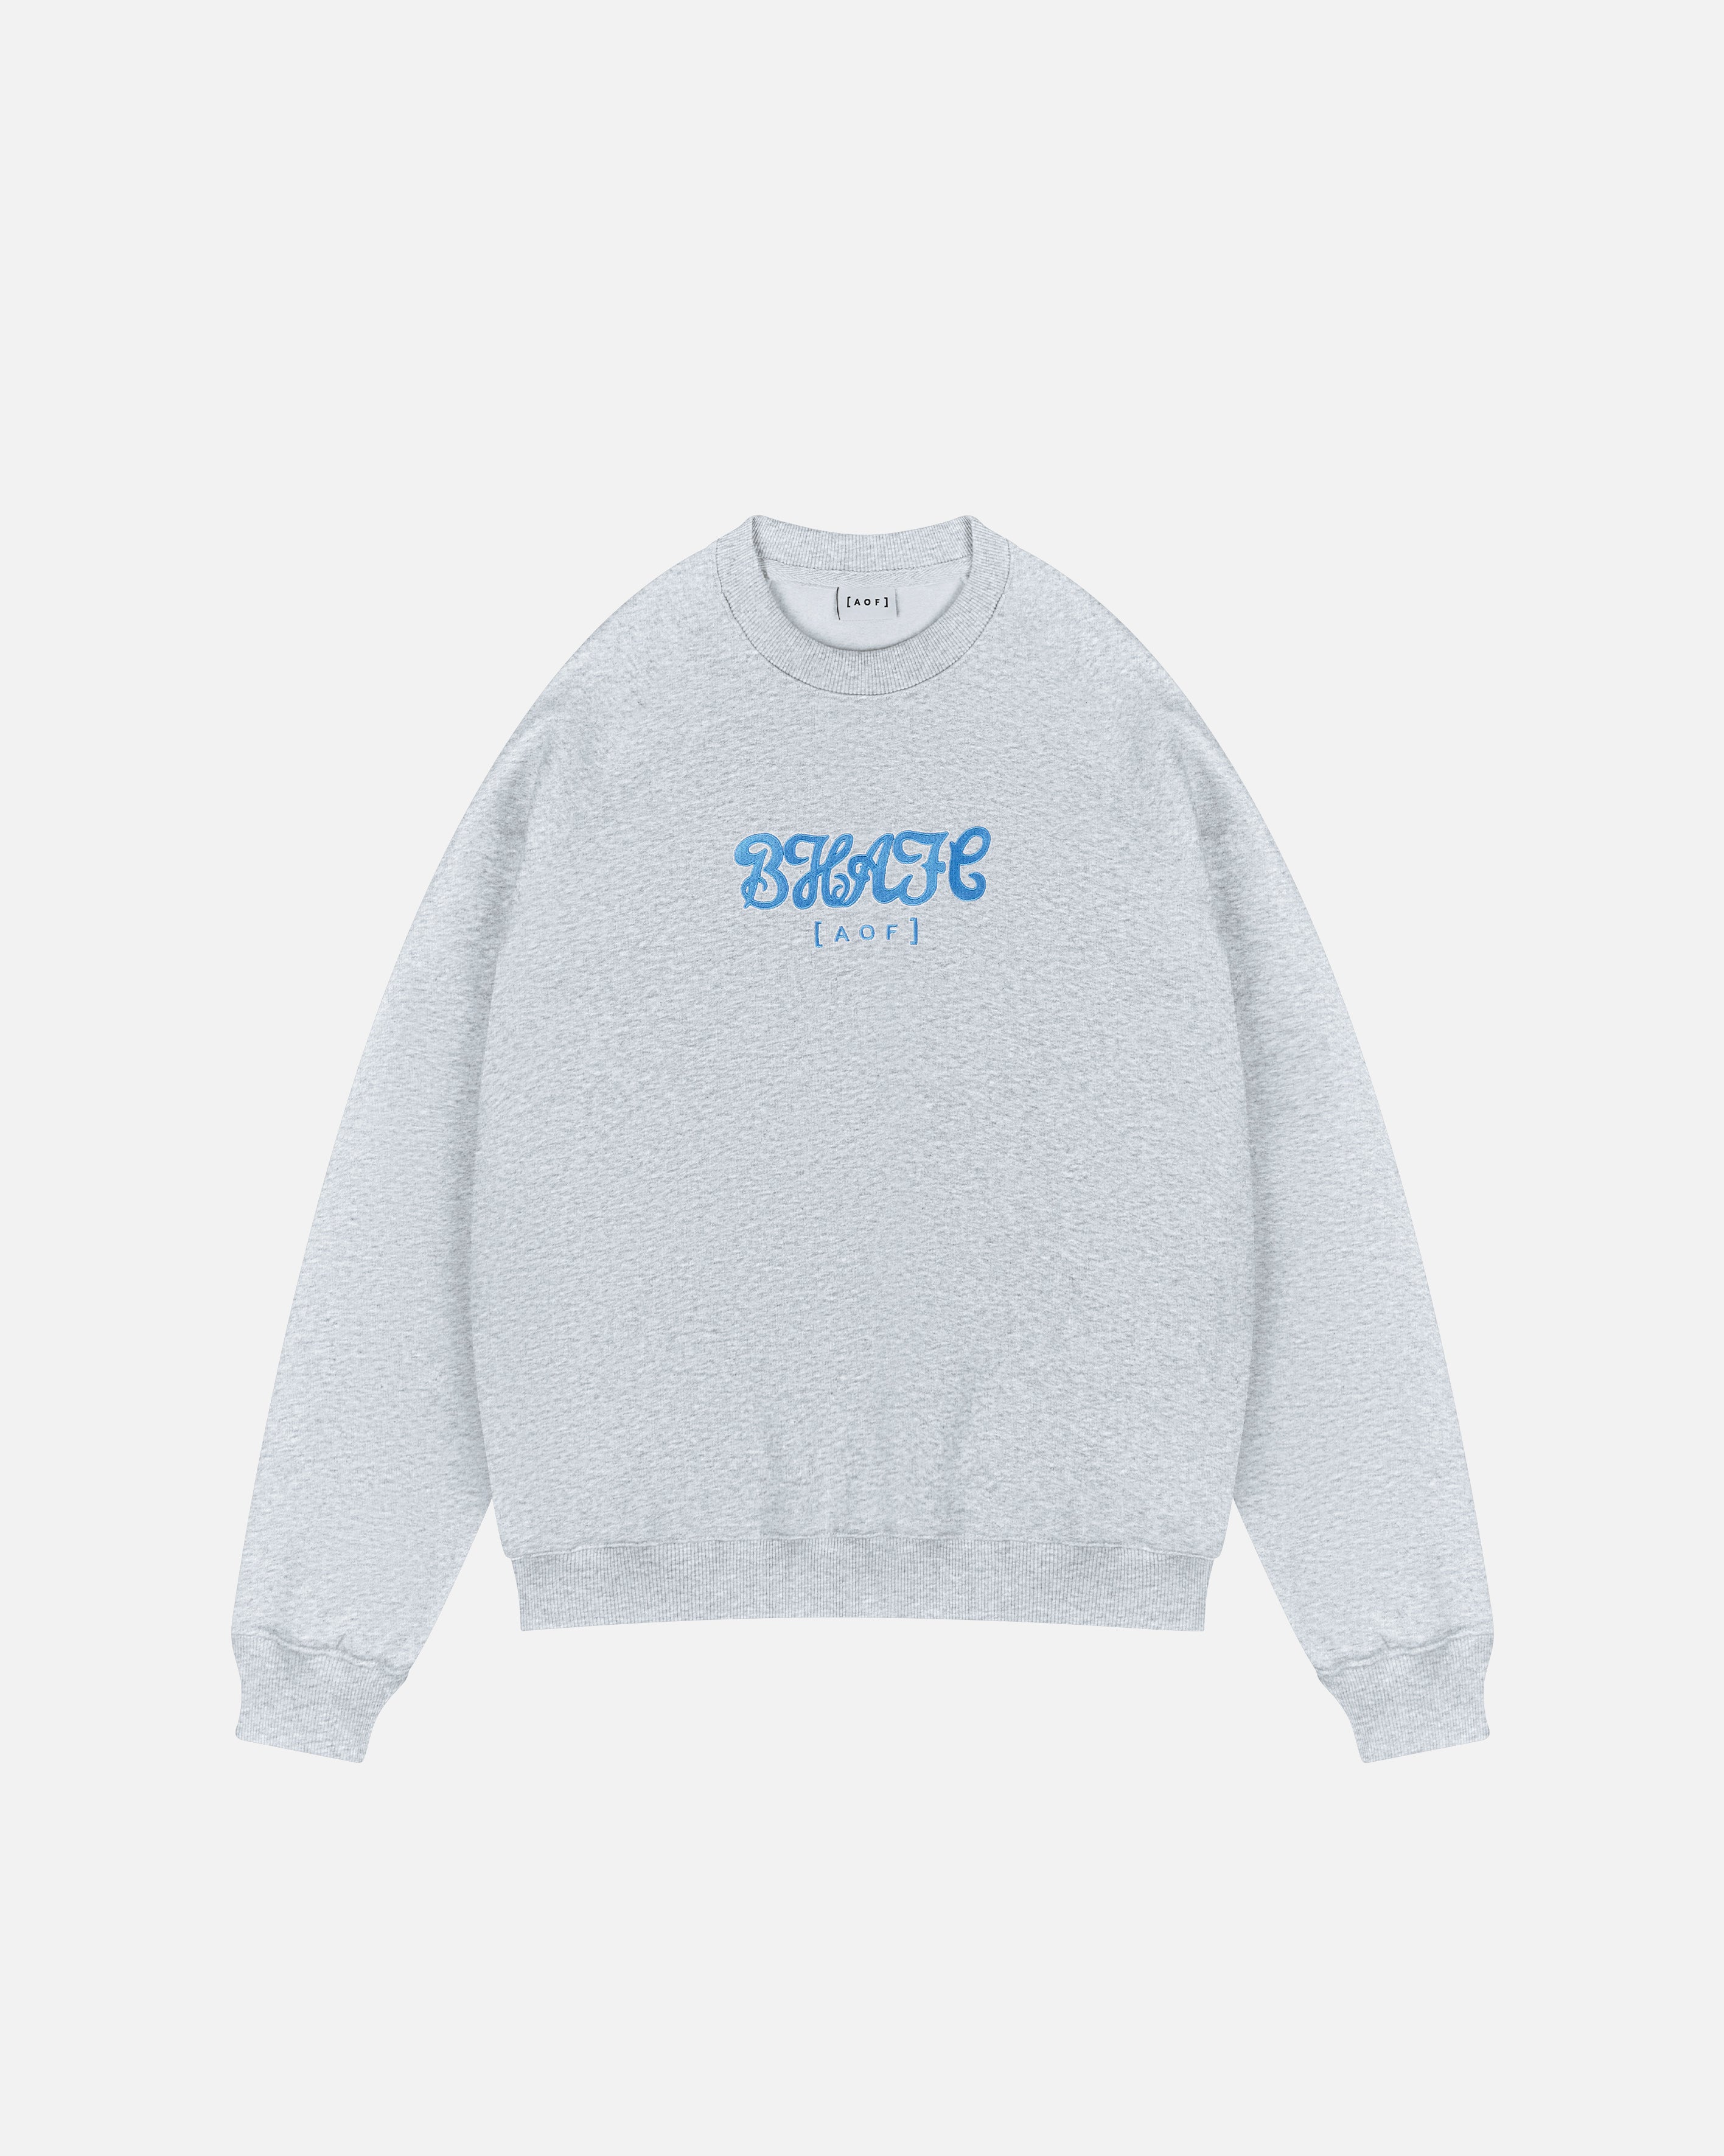 AOF x Brighton - Grey Sweatshirt